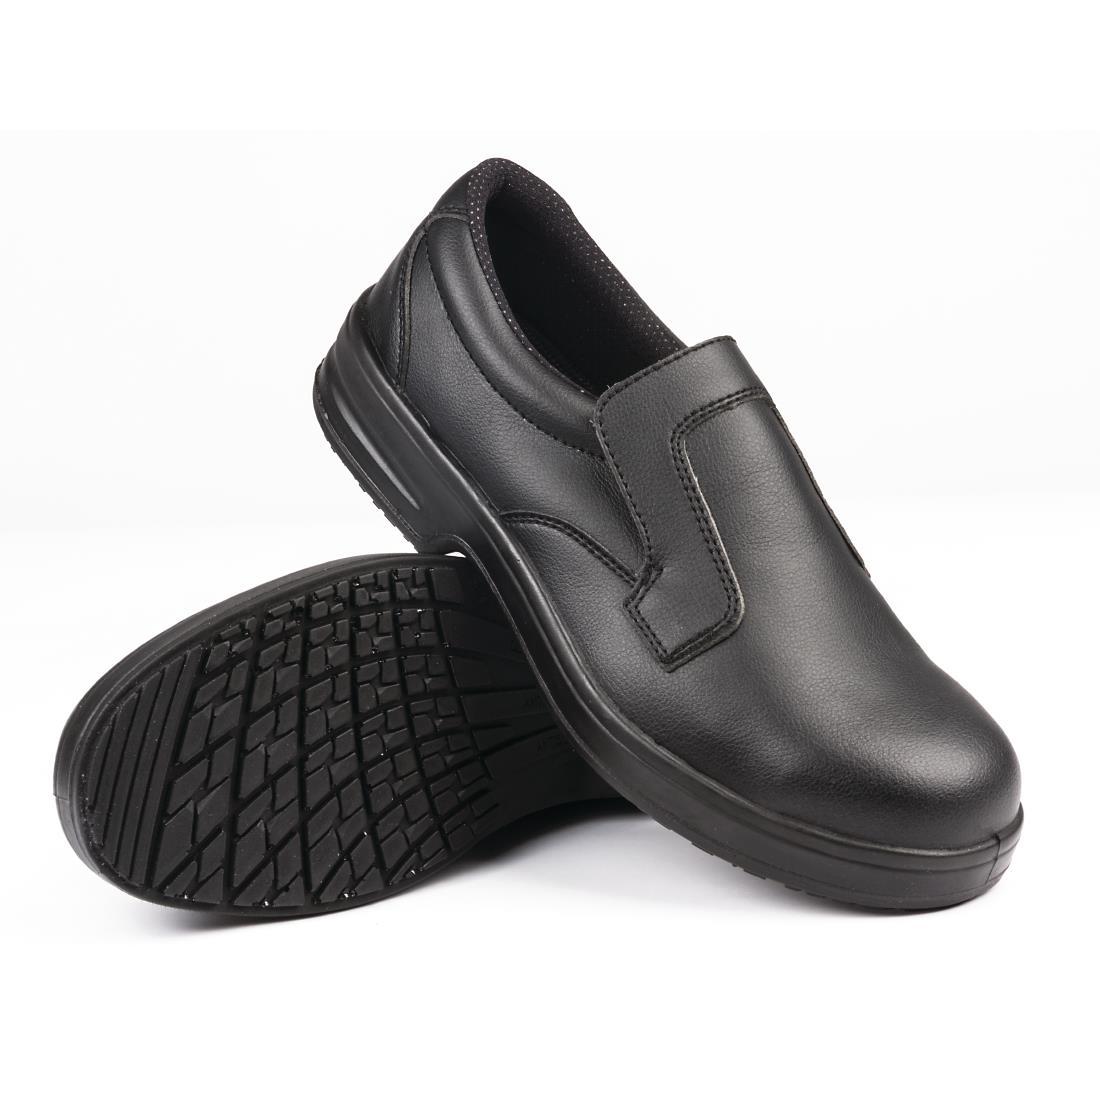 Slipbuster Lite Slip On Safety Shoes Black 39 - A845-39  - 3